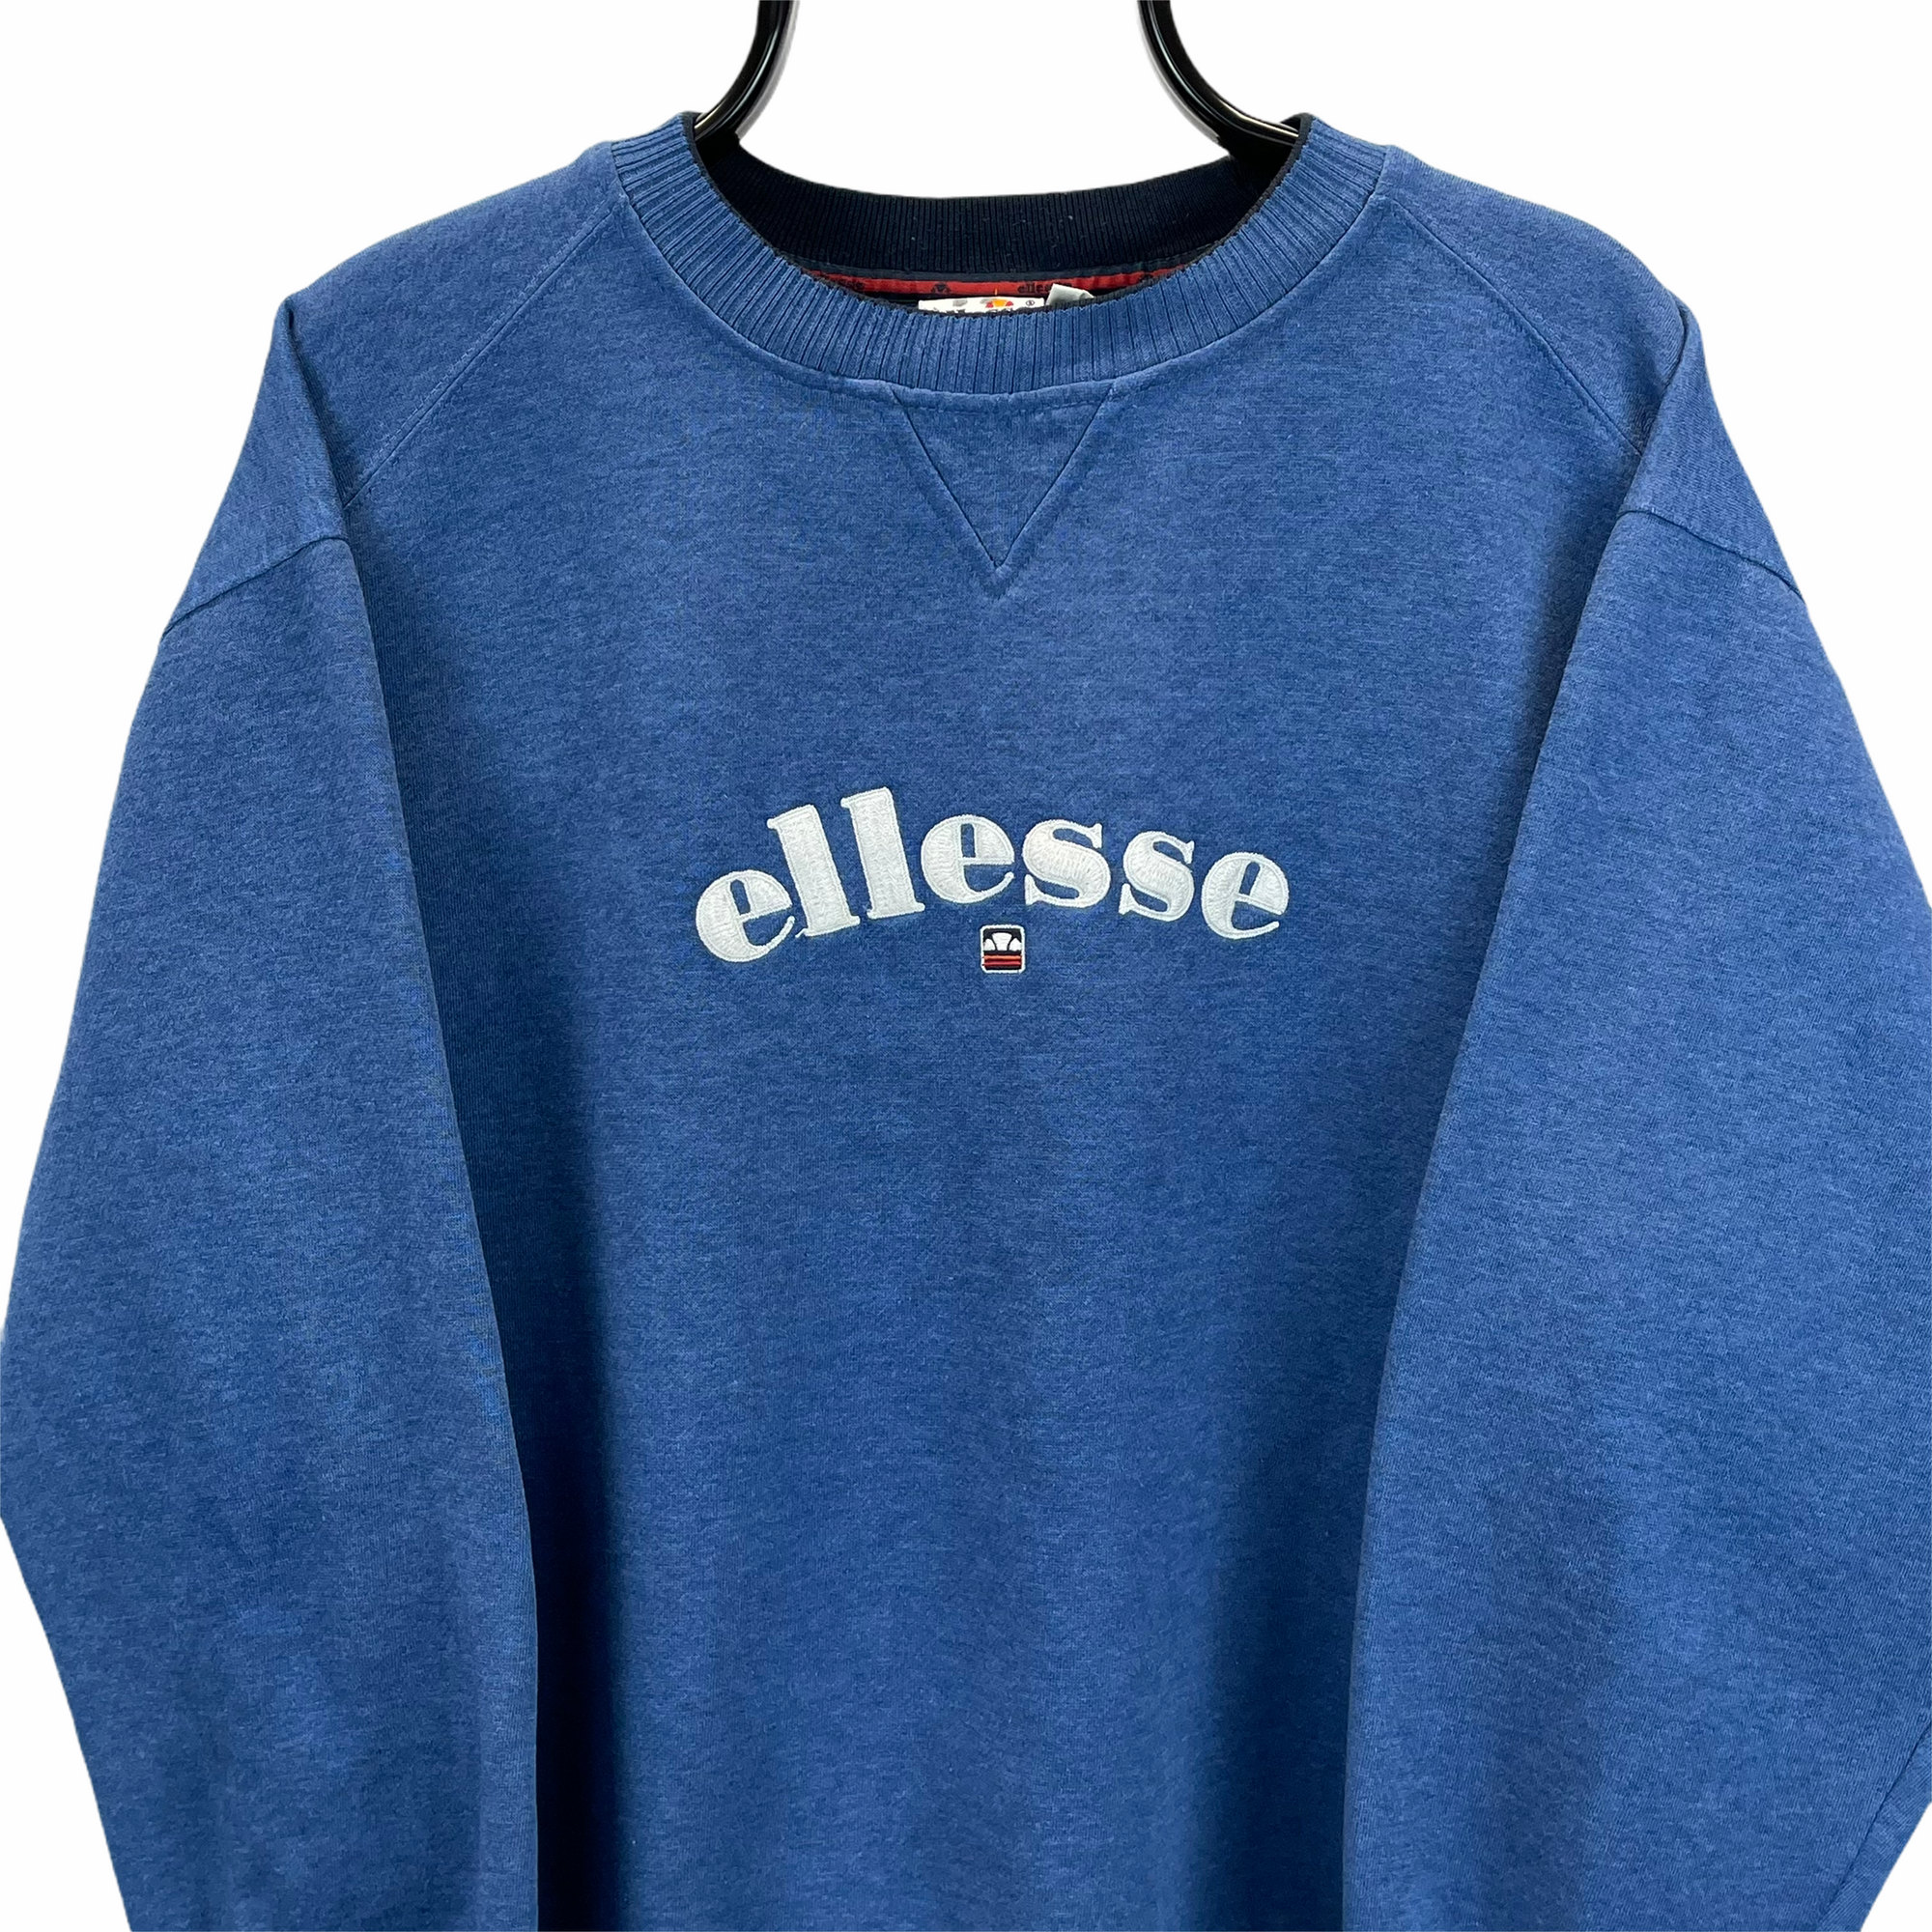 Vintage 90s Ellesse Spellout Sweatshirt in Blue - Men's Medium/Women's Large